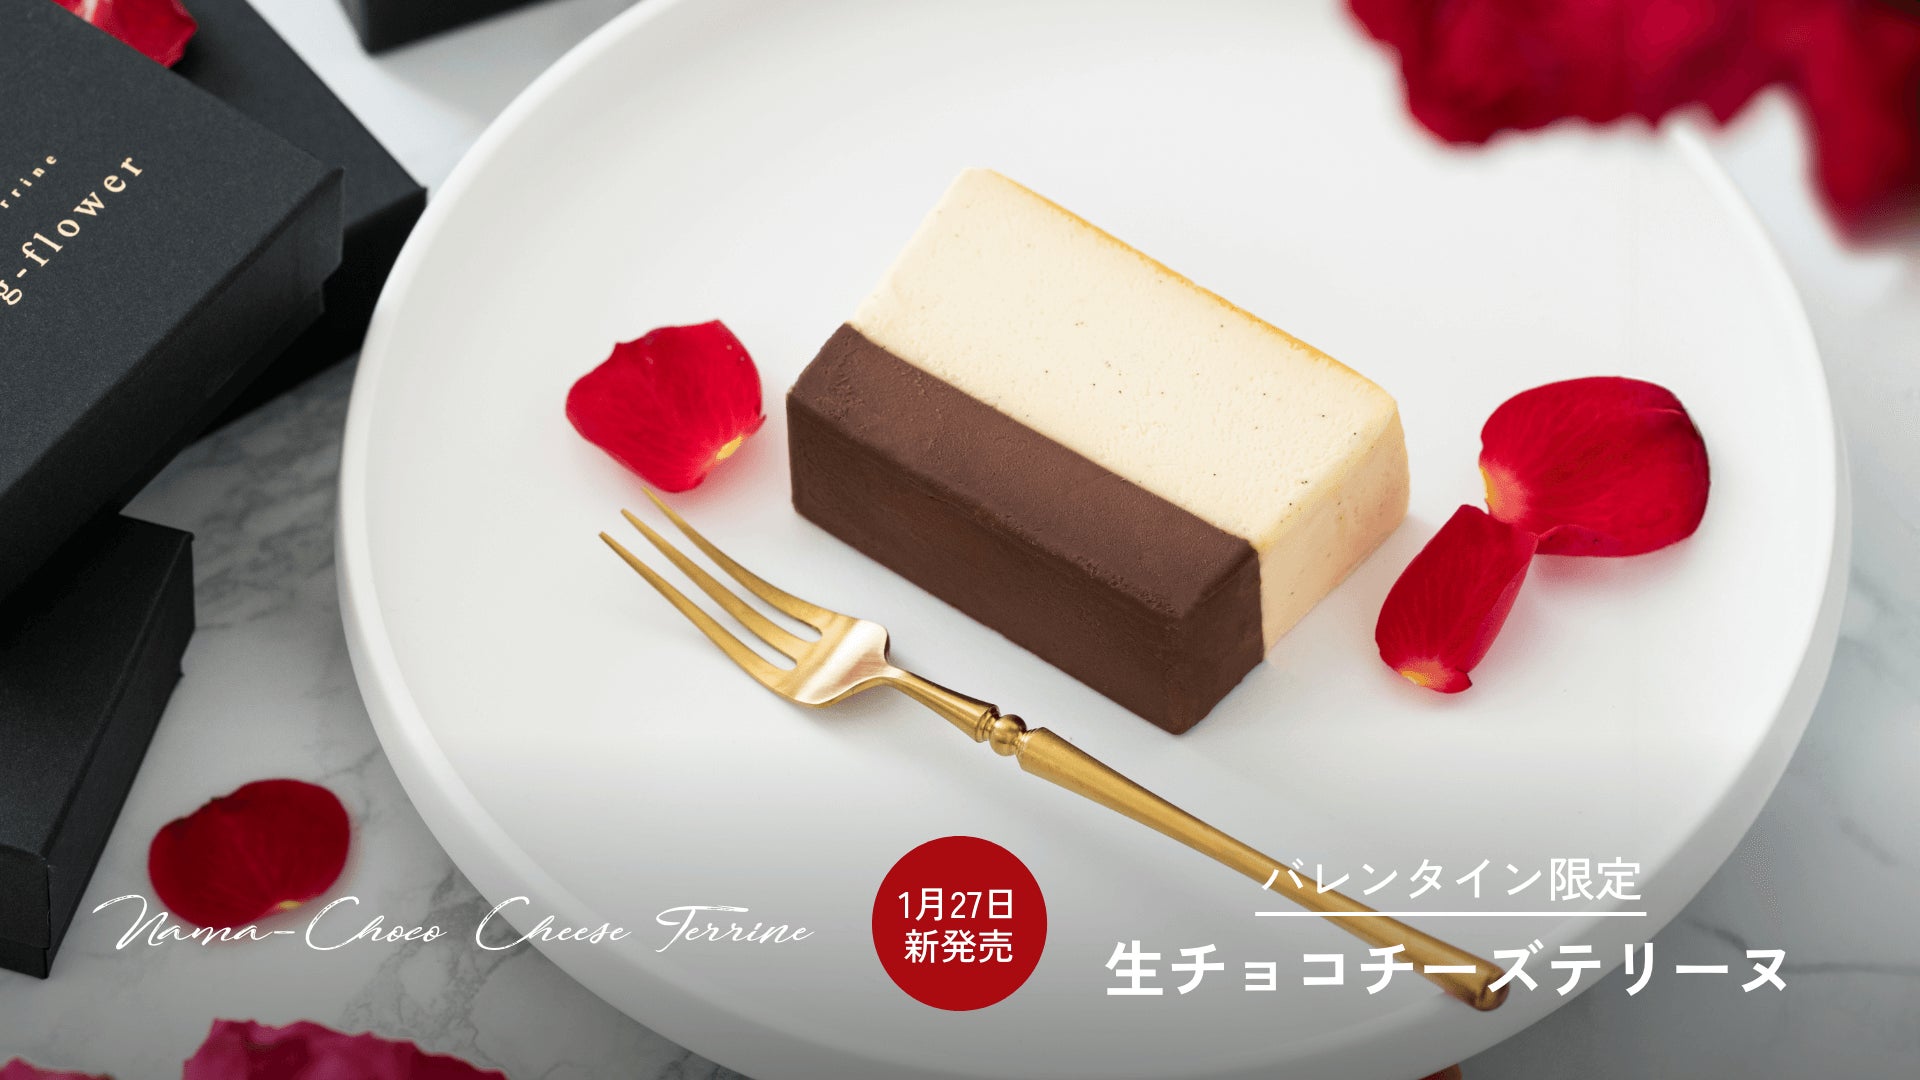 h.u.g-flower(ハグフラワー)、”大人のバレンタイン”に「生チョコチーズテリーヌ」を1月27日(土)より販売開始